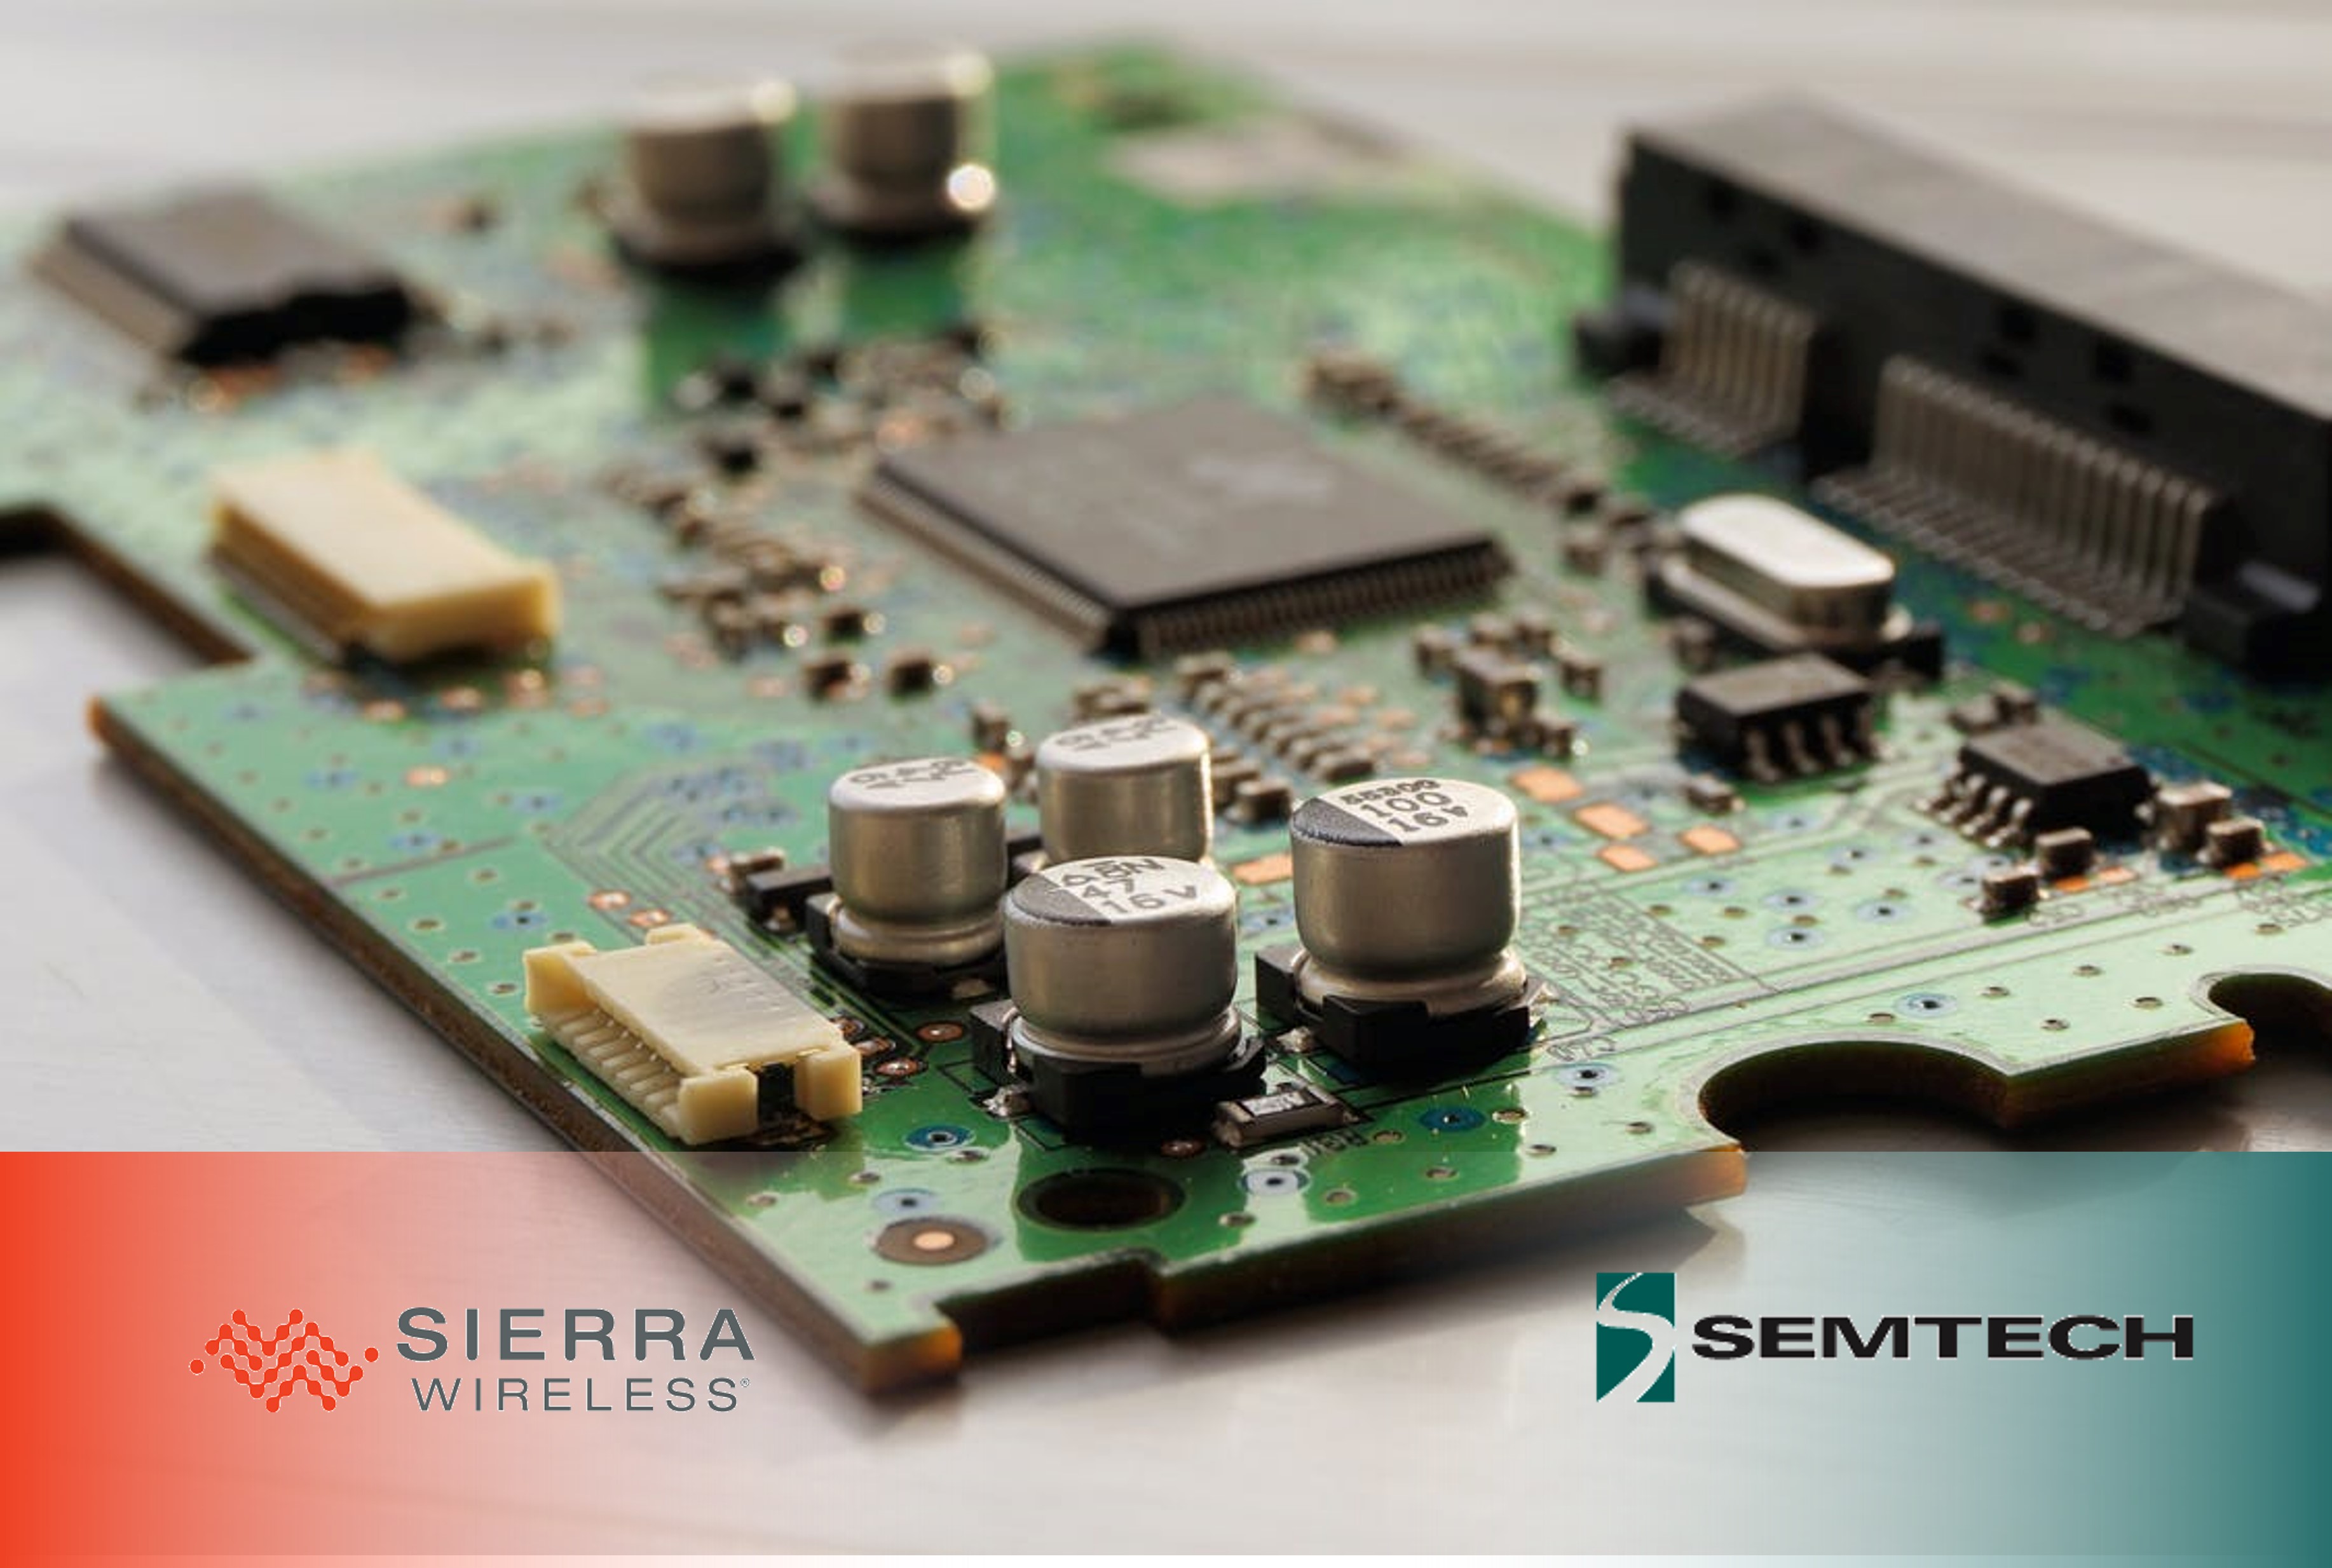 Can Semtech’s Acquisition of Sierra Wireless Change Offerings in IoT Space?